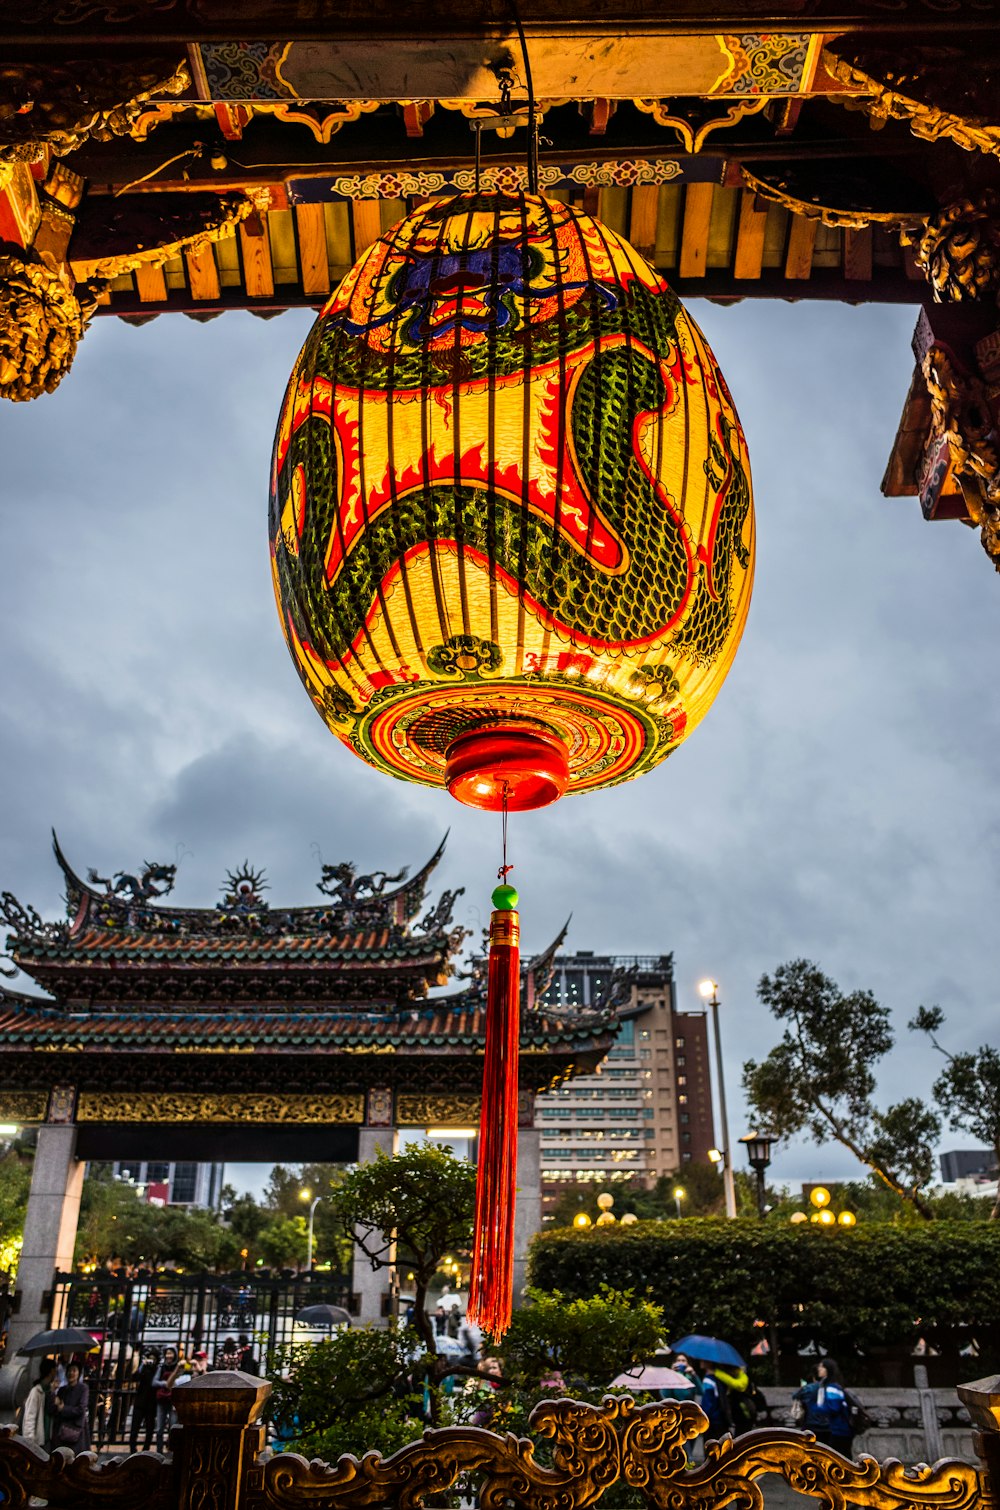 brown and green Chinese lantern during daytime